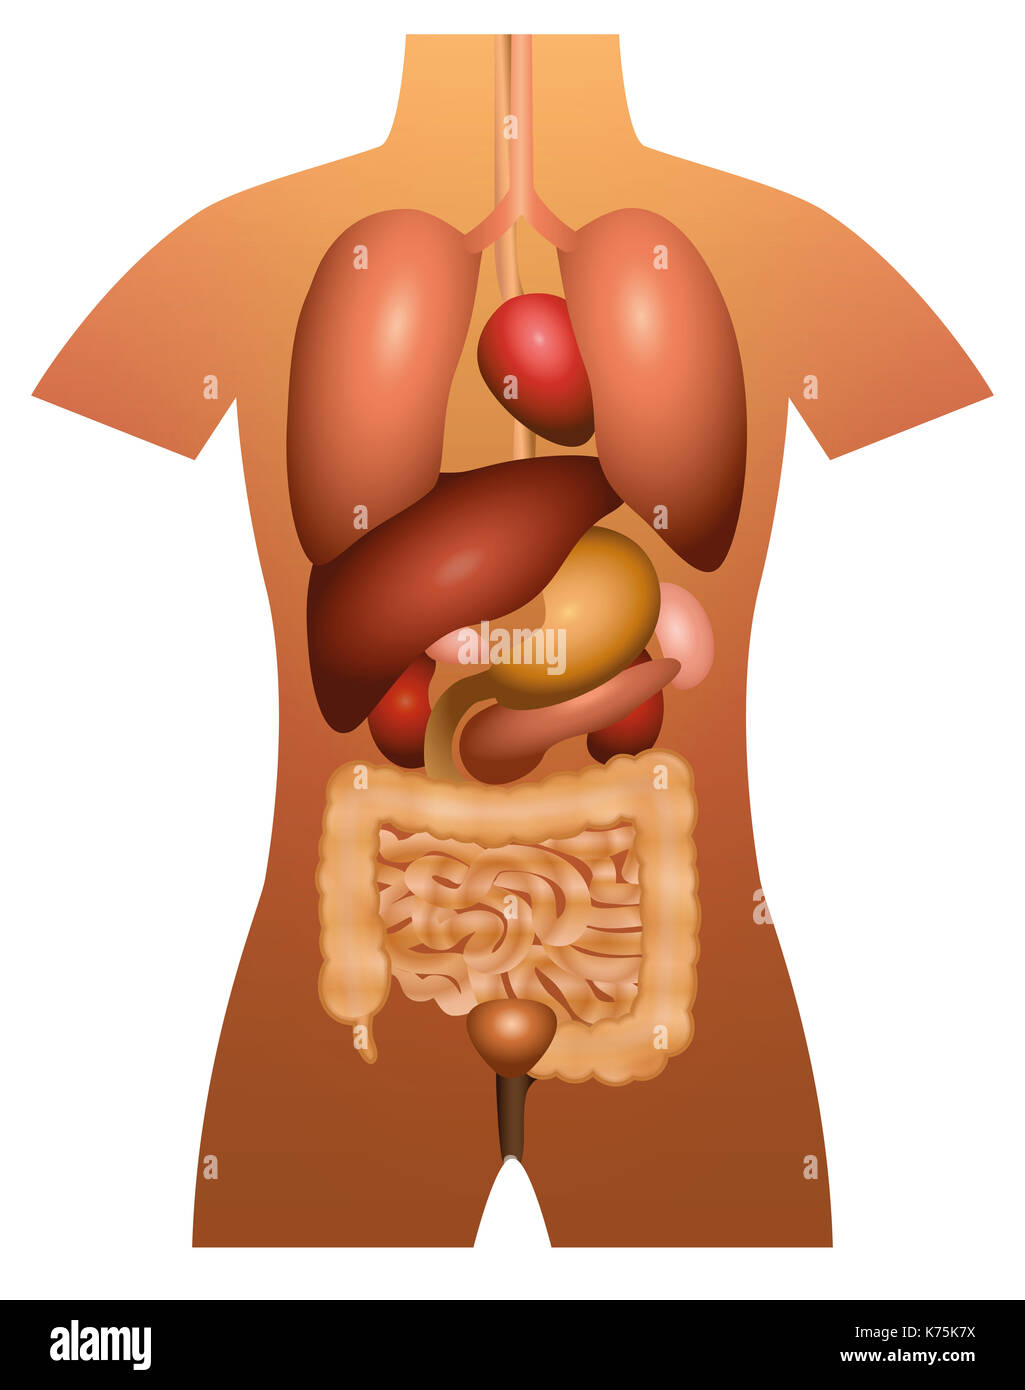 Inner organs - human anatomy - 3d illustration on white background. Stock Photo